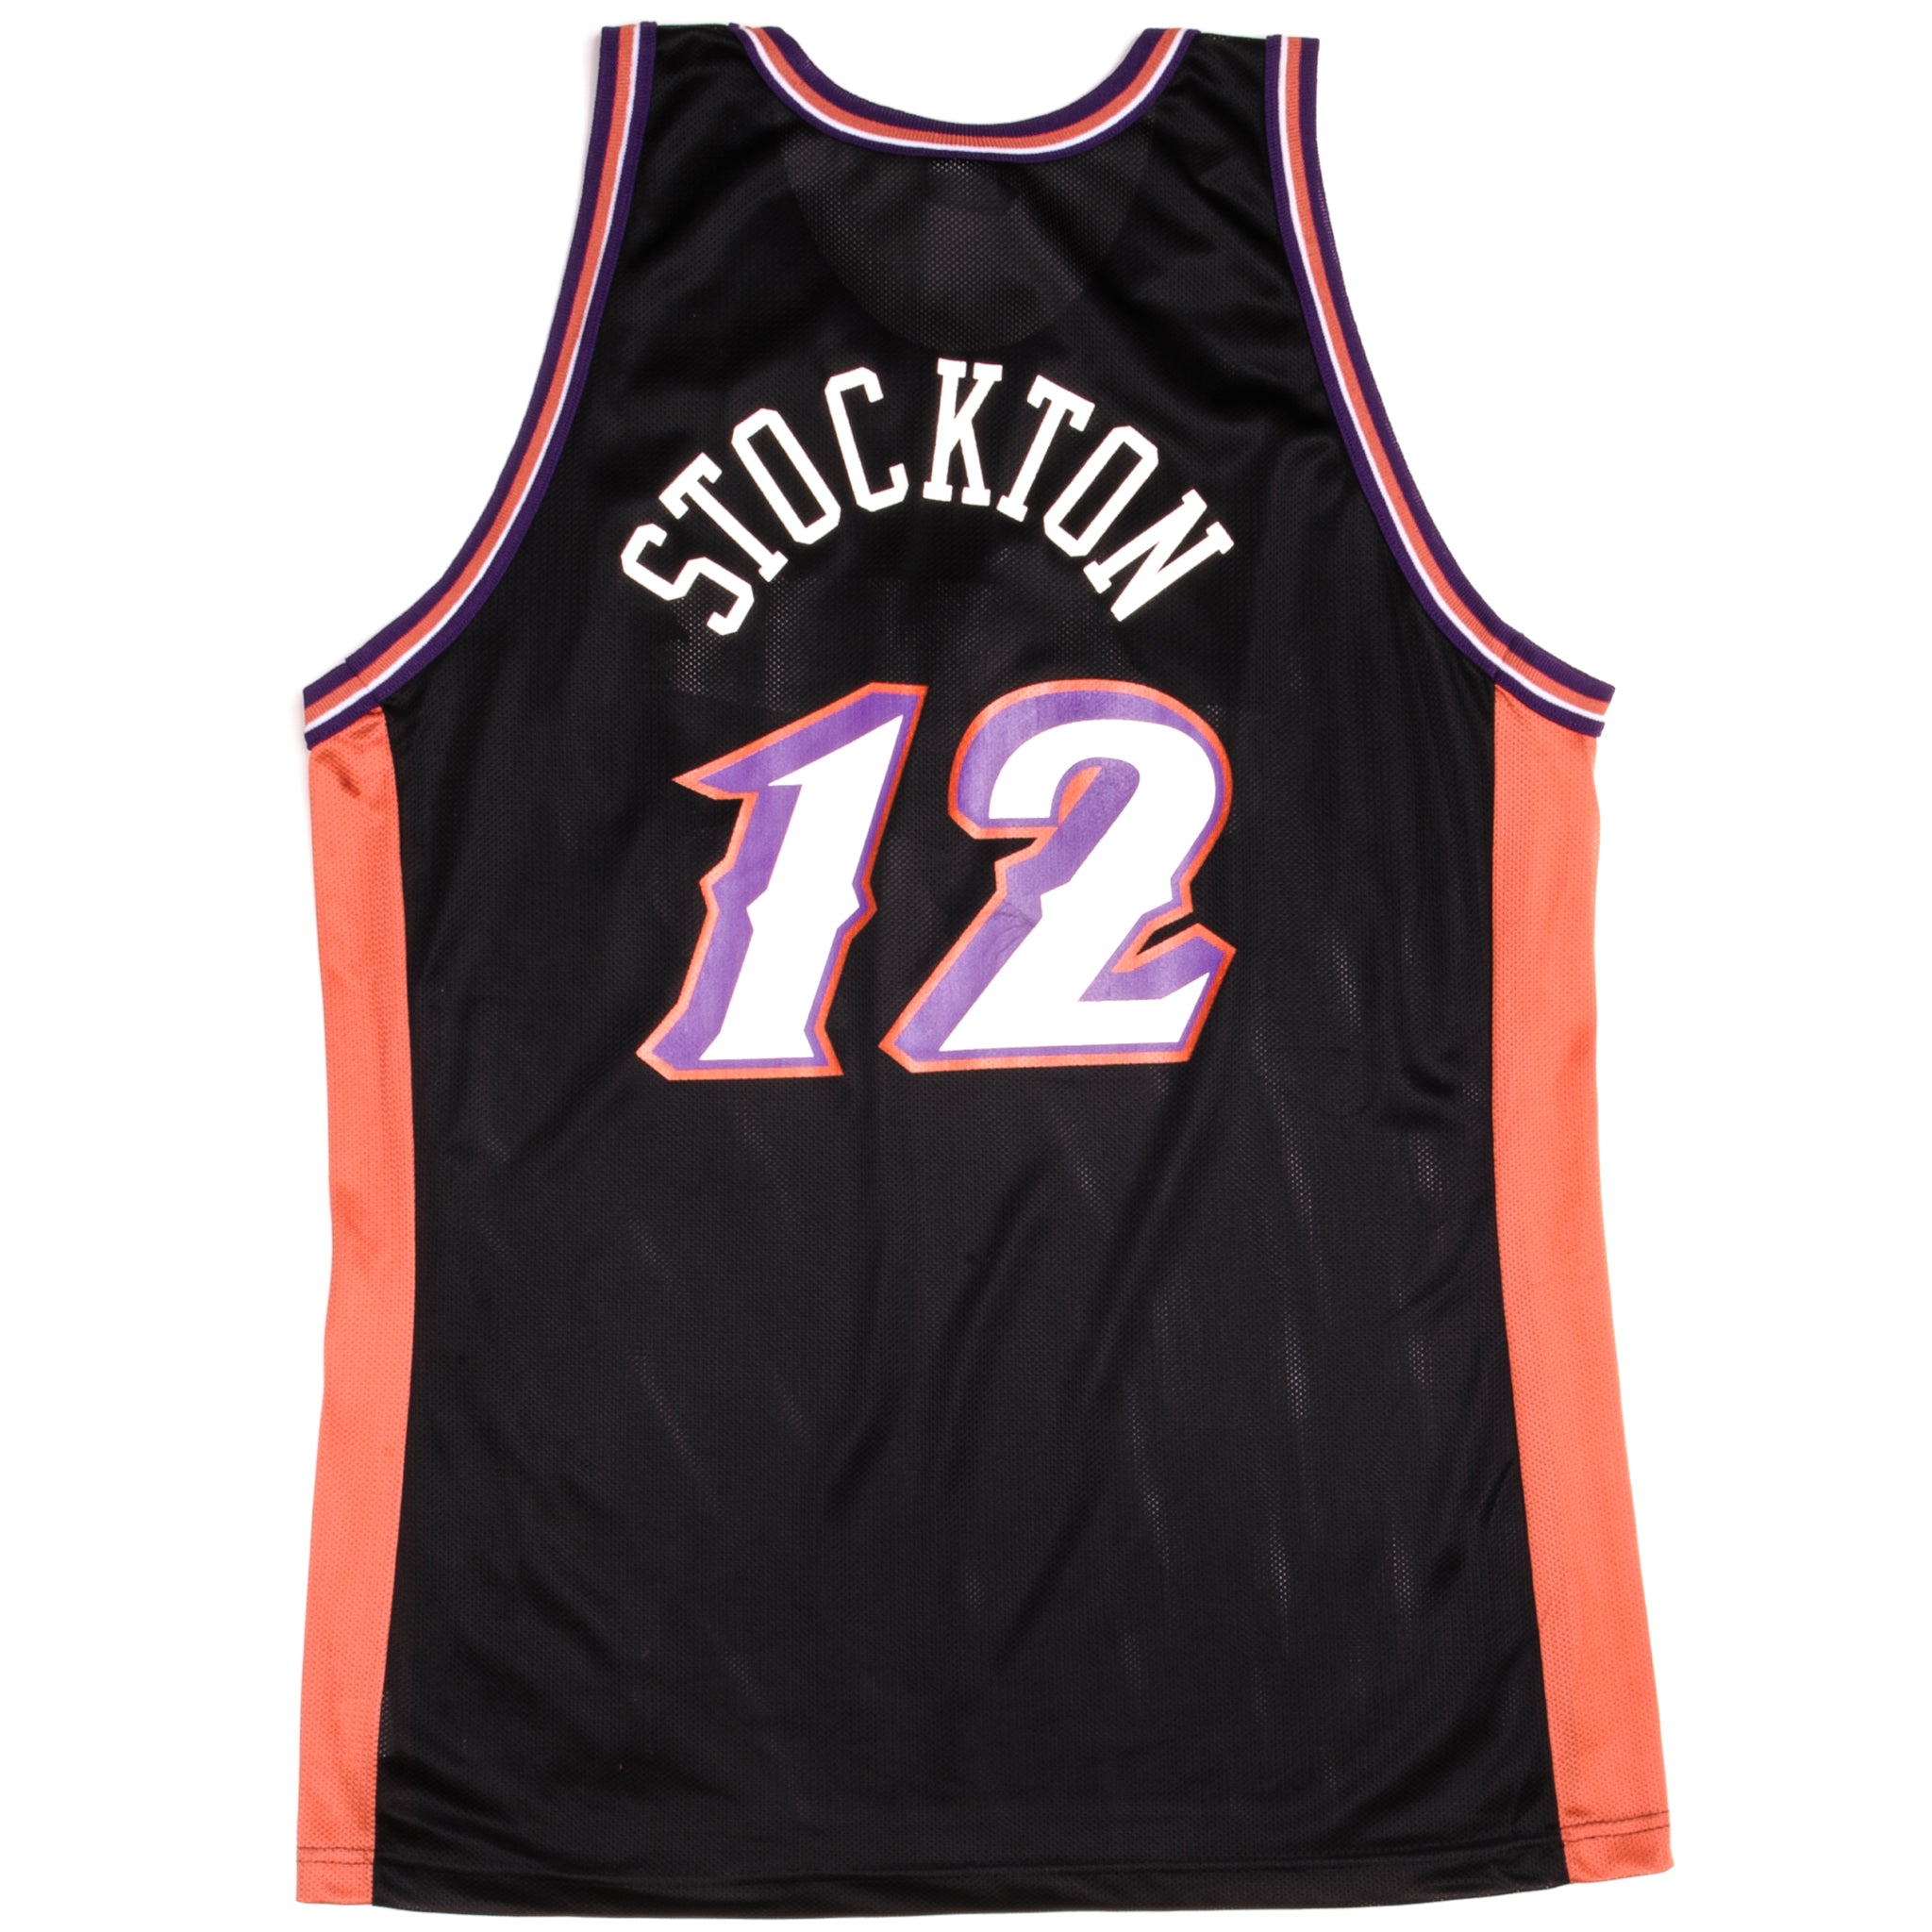 John Stockton Vintage Poster Rare utah Jazz Jersey 90's Shirt NBA